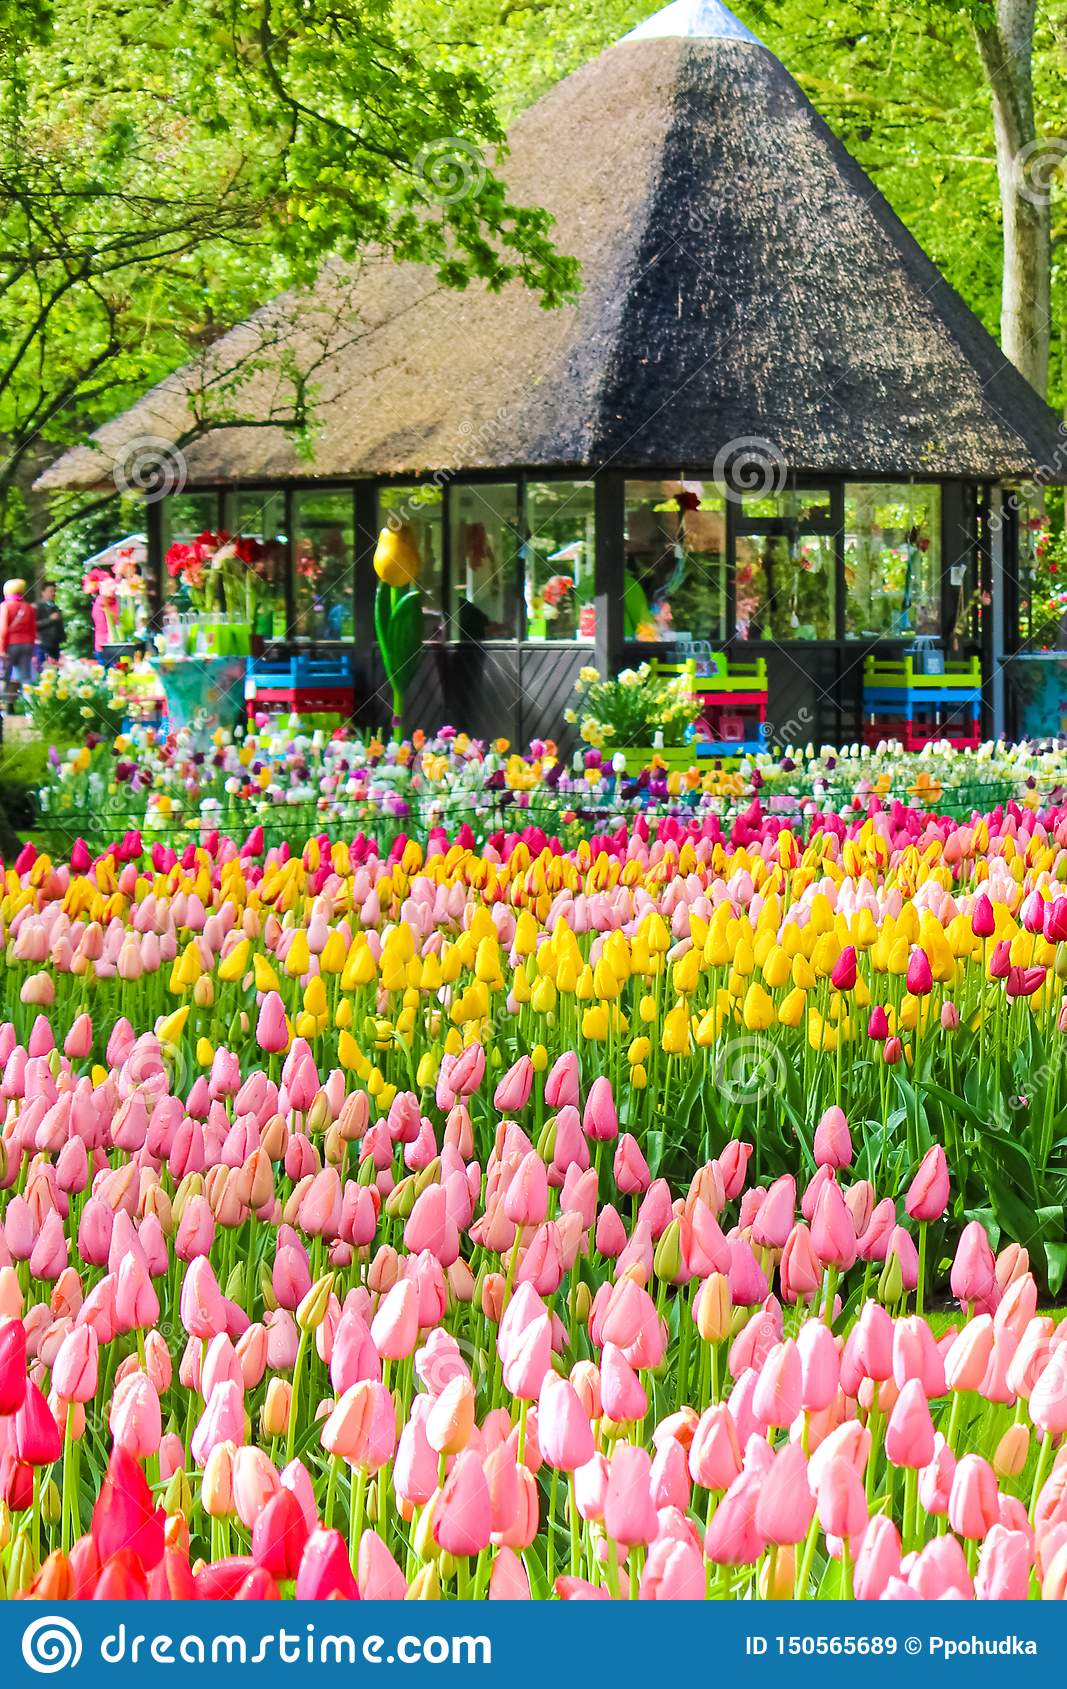 keukenhof lisse netherlands apr th amazing keukenhof gardens typical colorful tulips famous park major dutch tourist